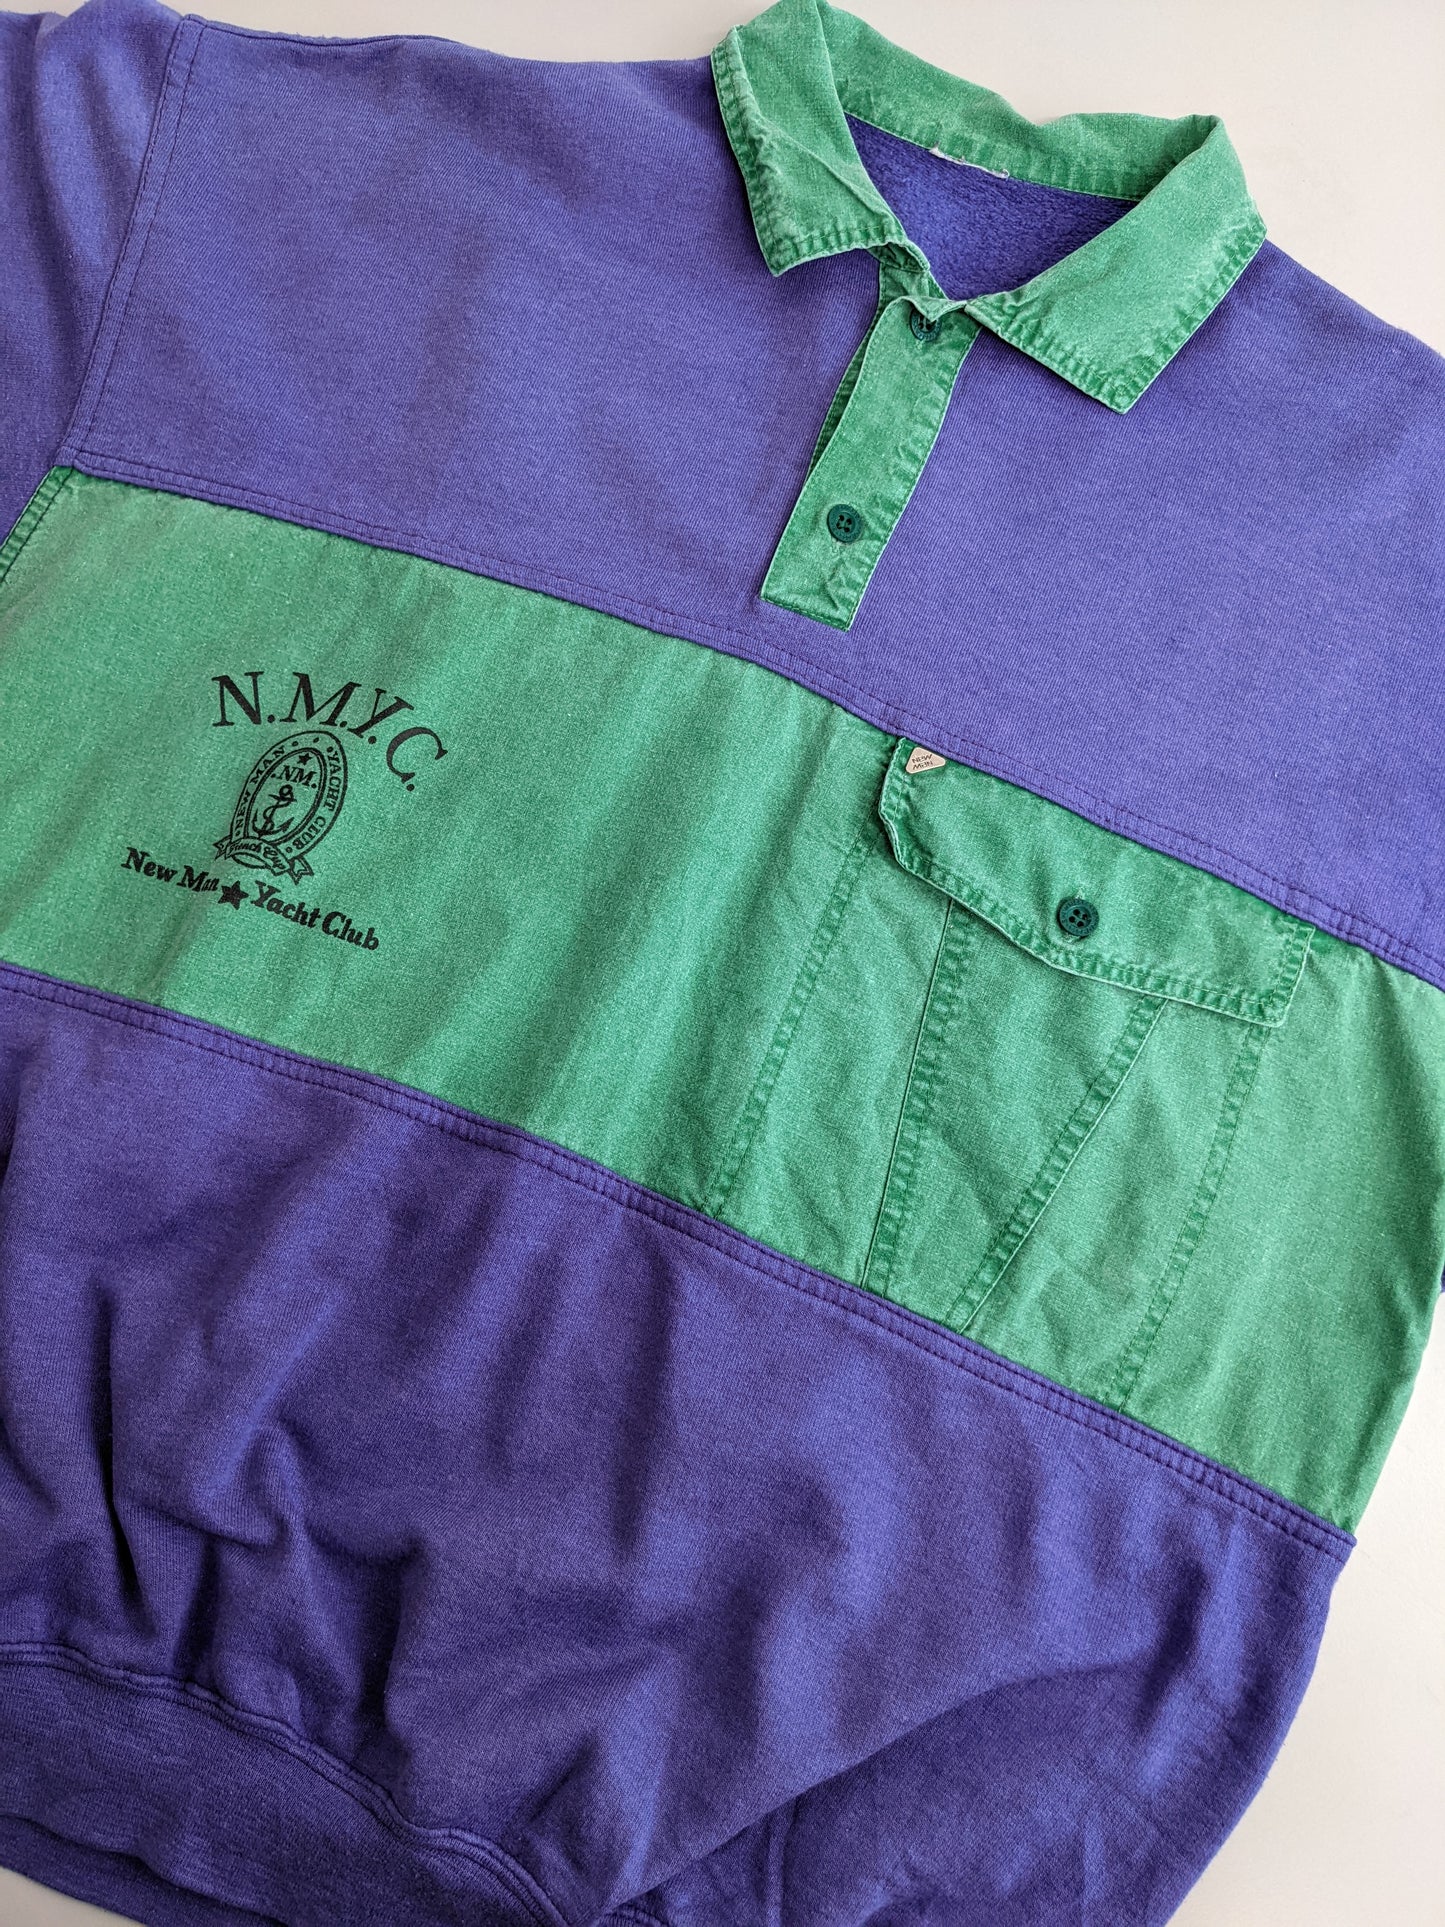 80s New Man Sweatshirt Purple Green M